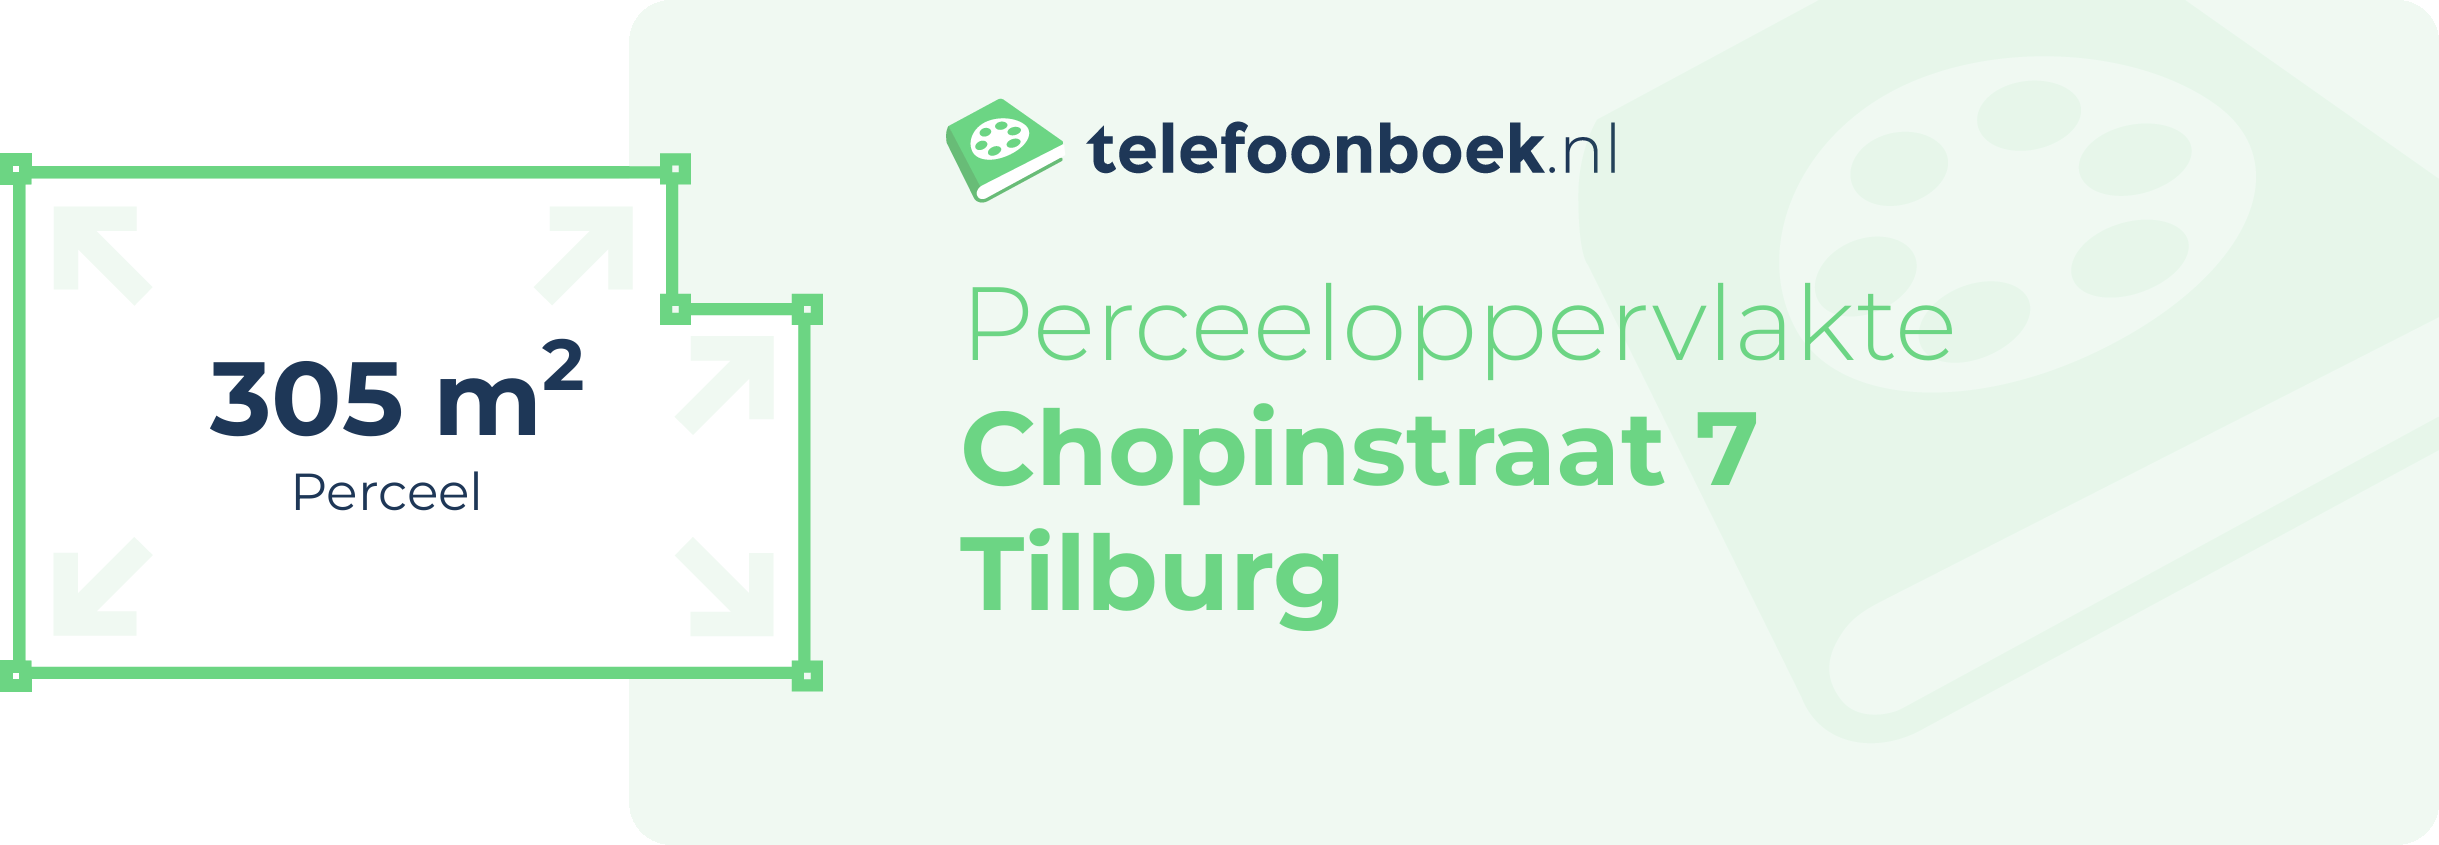 Perceeloppervlakte Chopinstraat 7 Tilburg